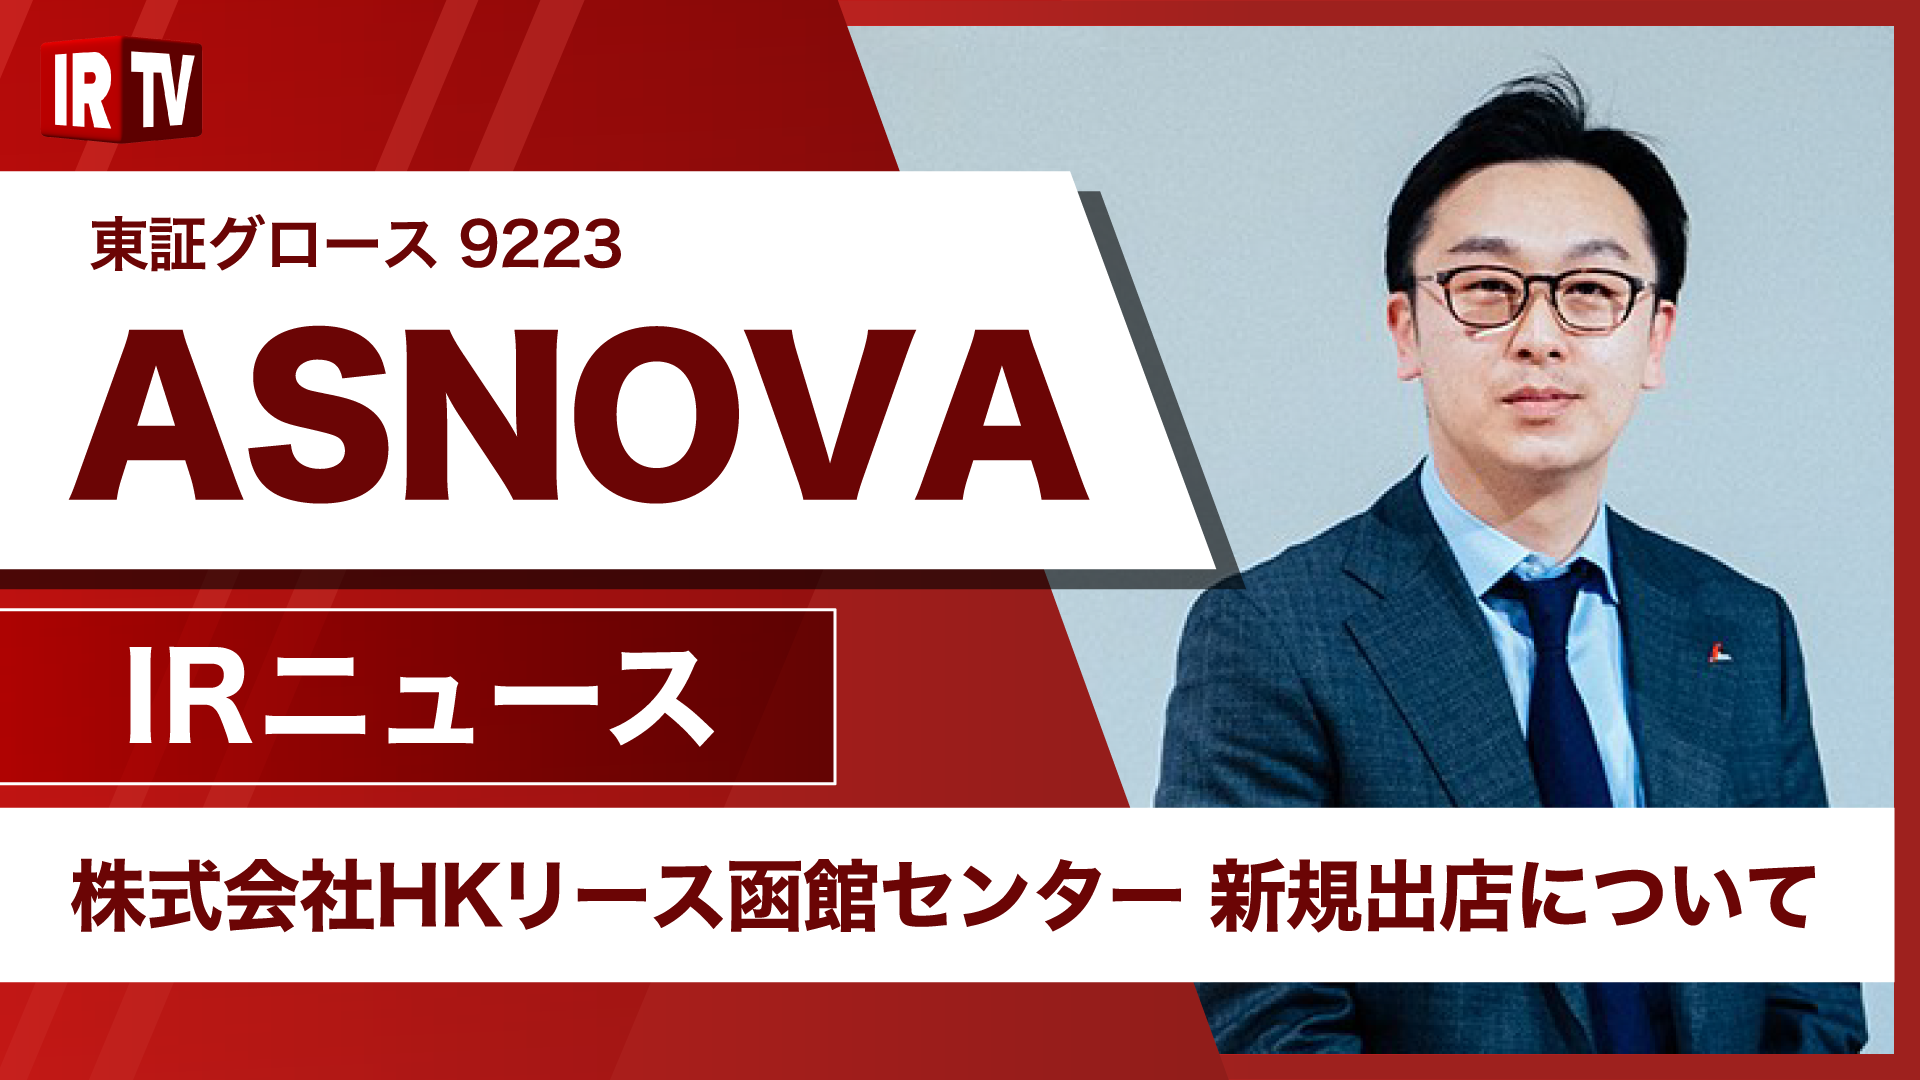 【IRTV 9223】ASNOVA/ASNOVA STATION 株式会社HKリース函館センターを新規出店